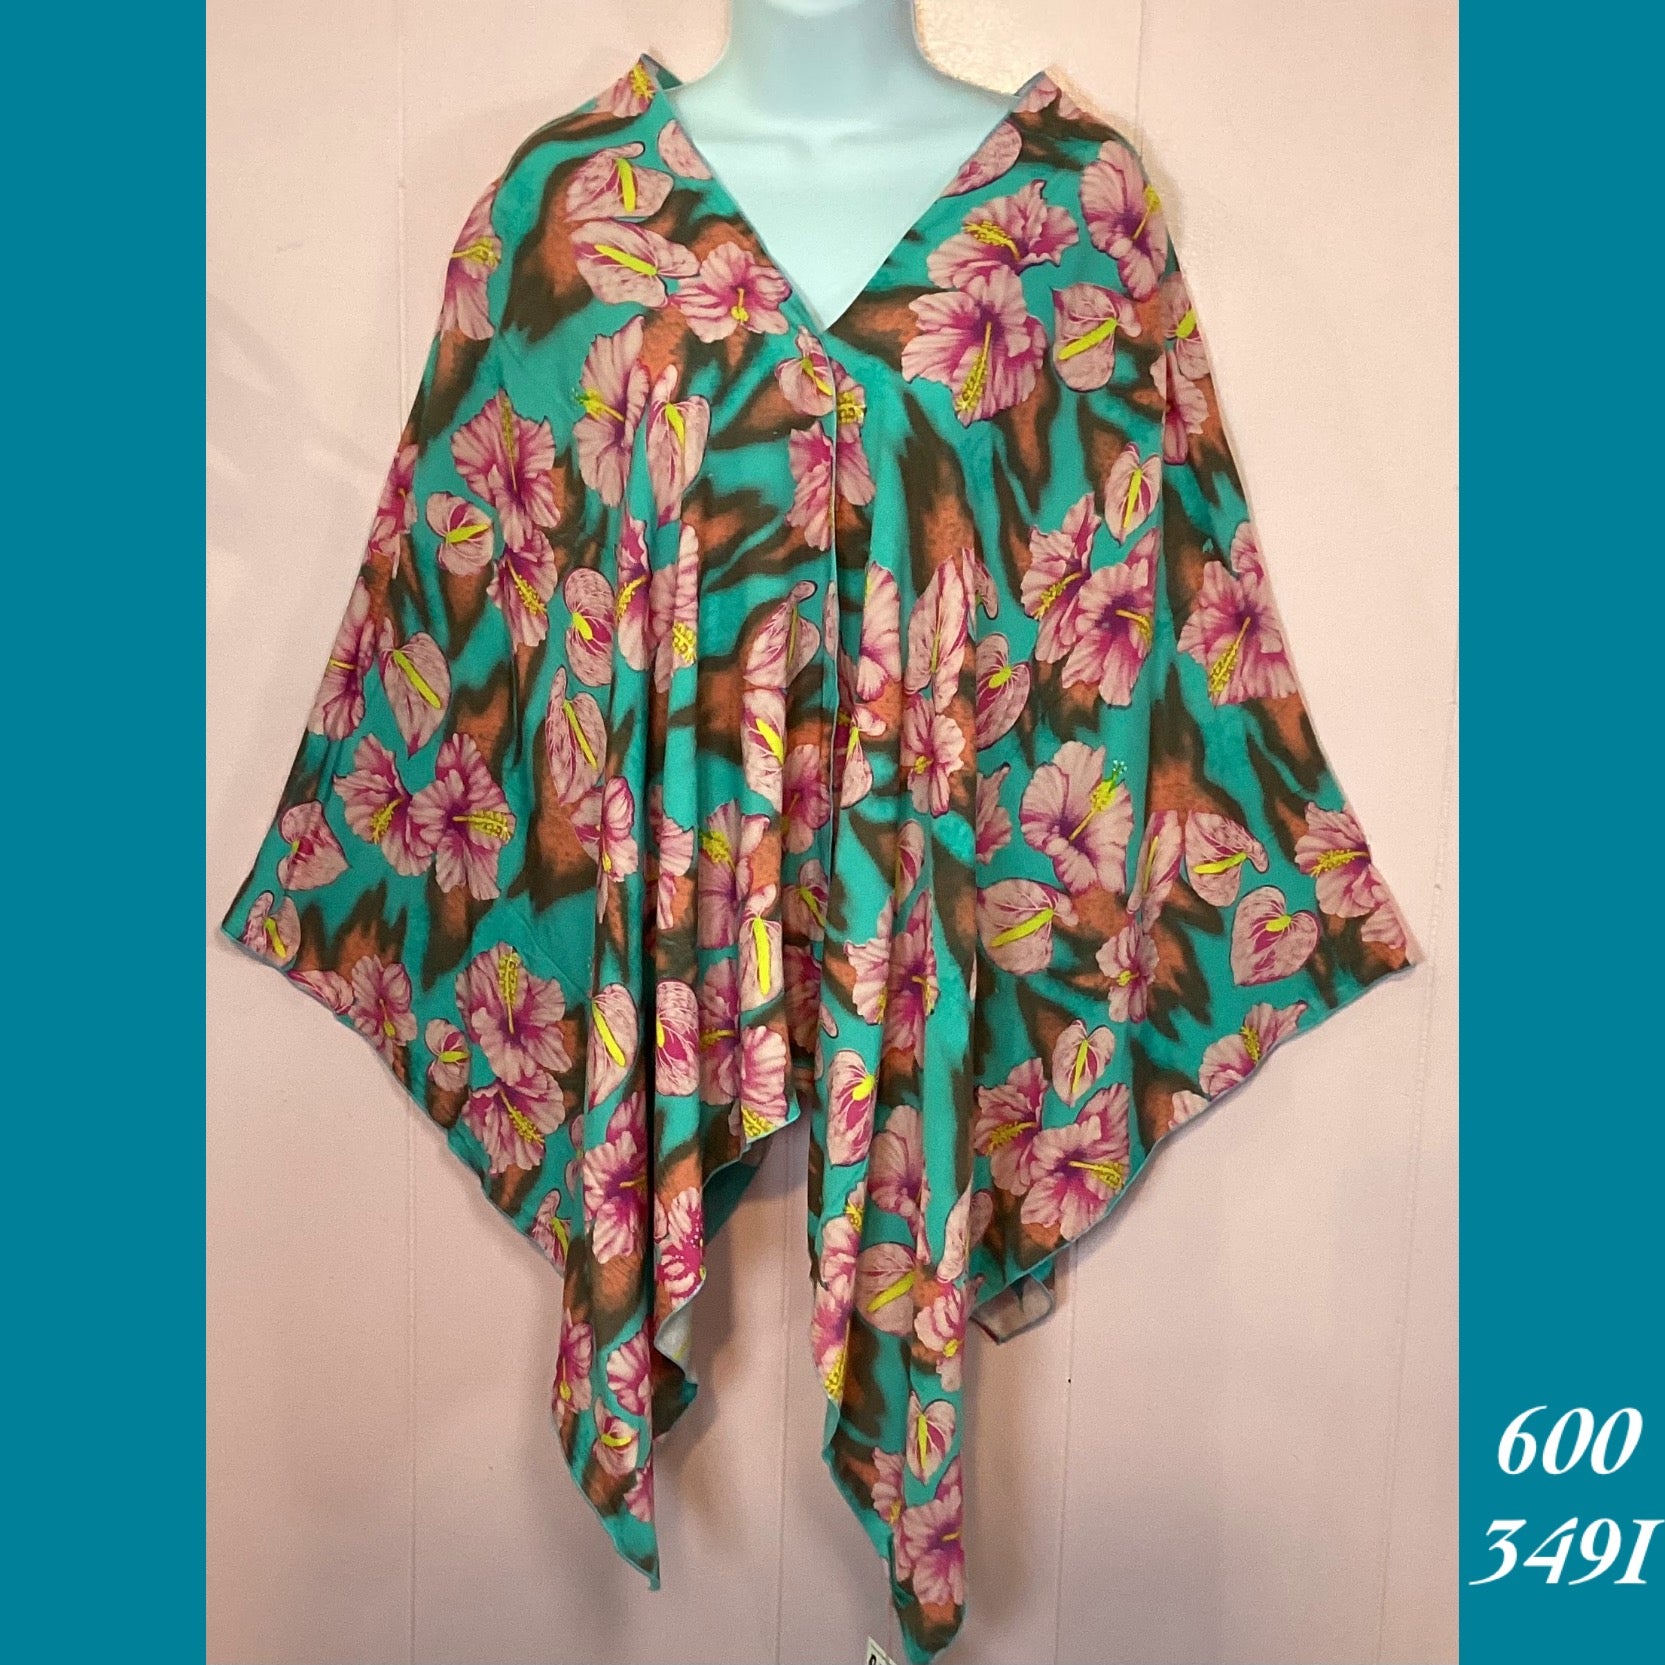 600 - 349I , Shoulder wrap sarong